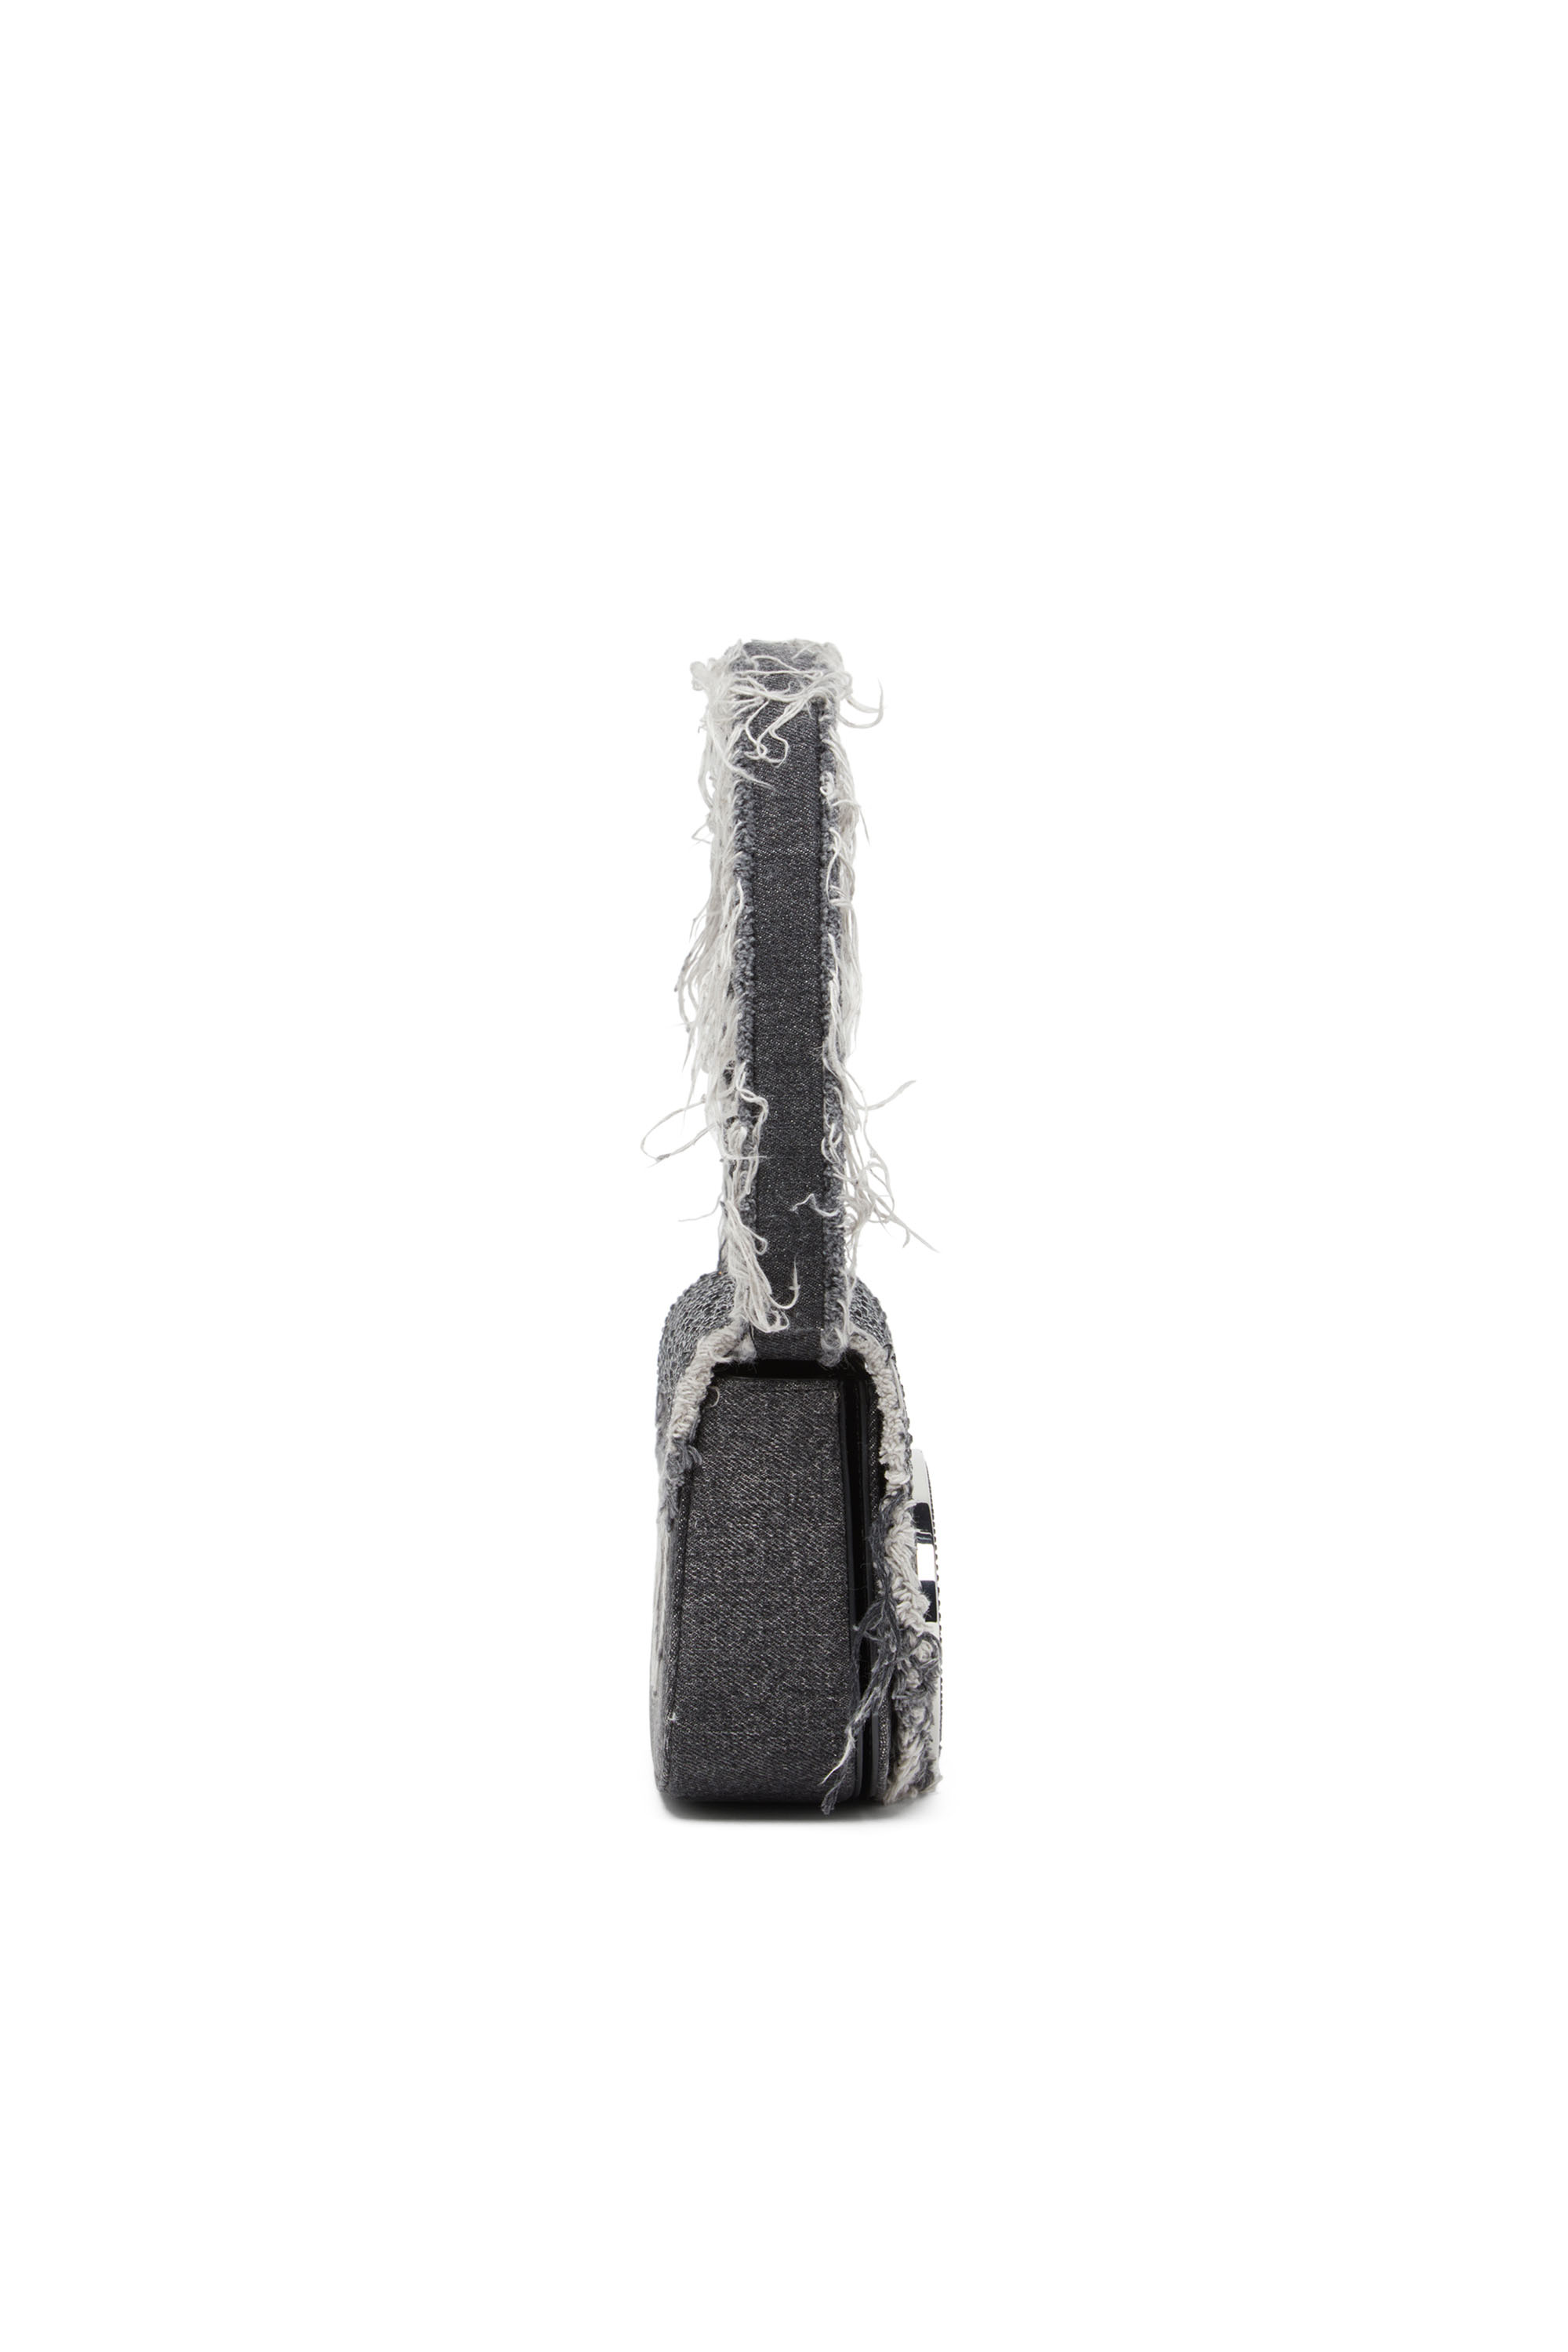 Diesel - 1DR, Female 1DR-Iconic shoulder bag in denim and crystals in ブラック - Image 3